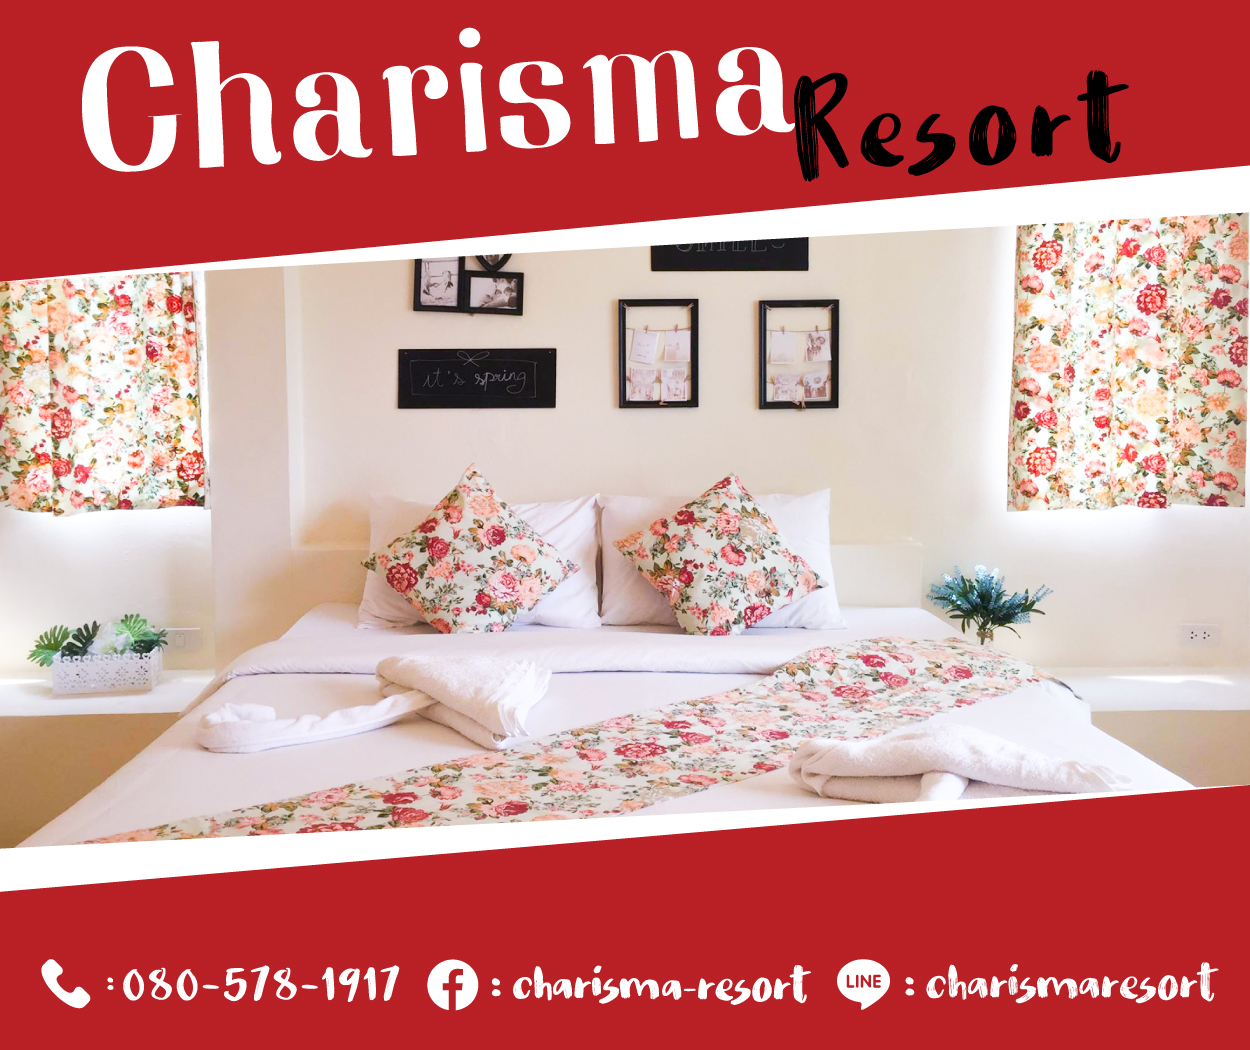 Charisma Resort